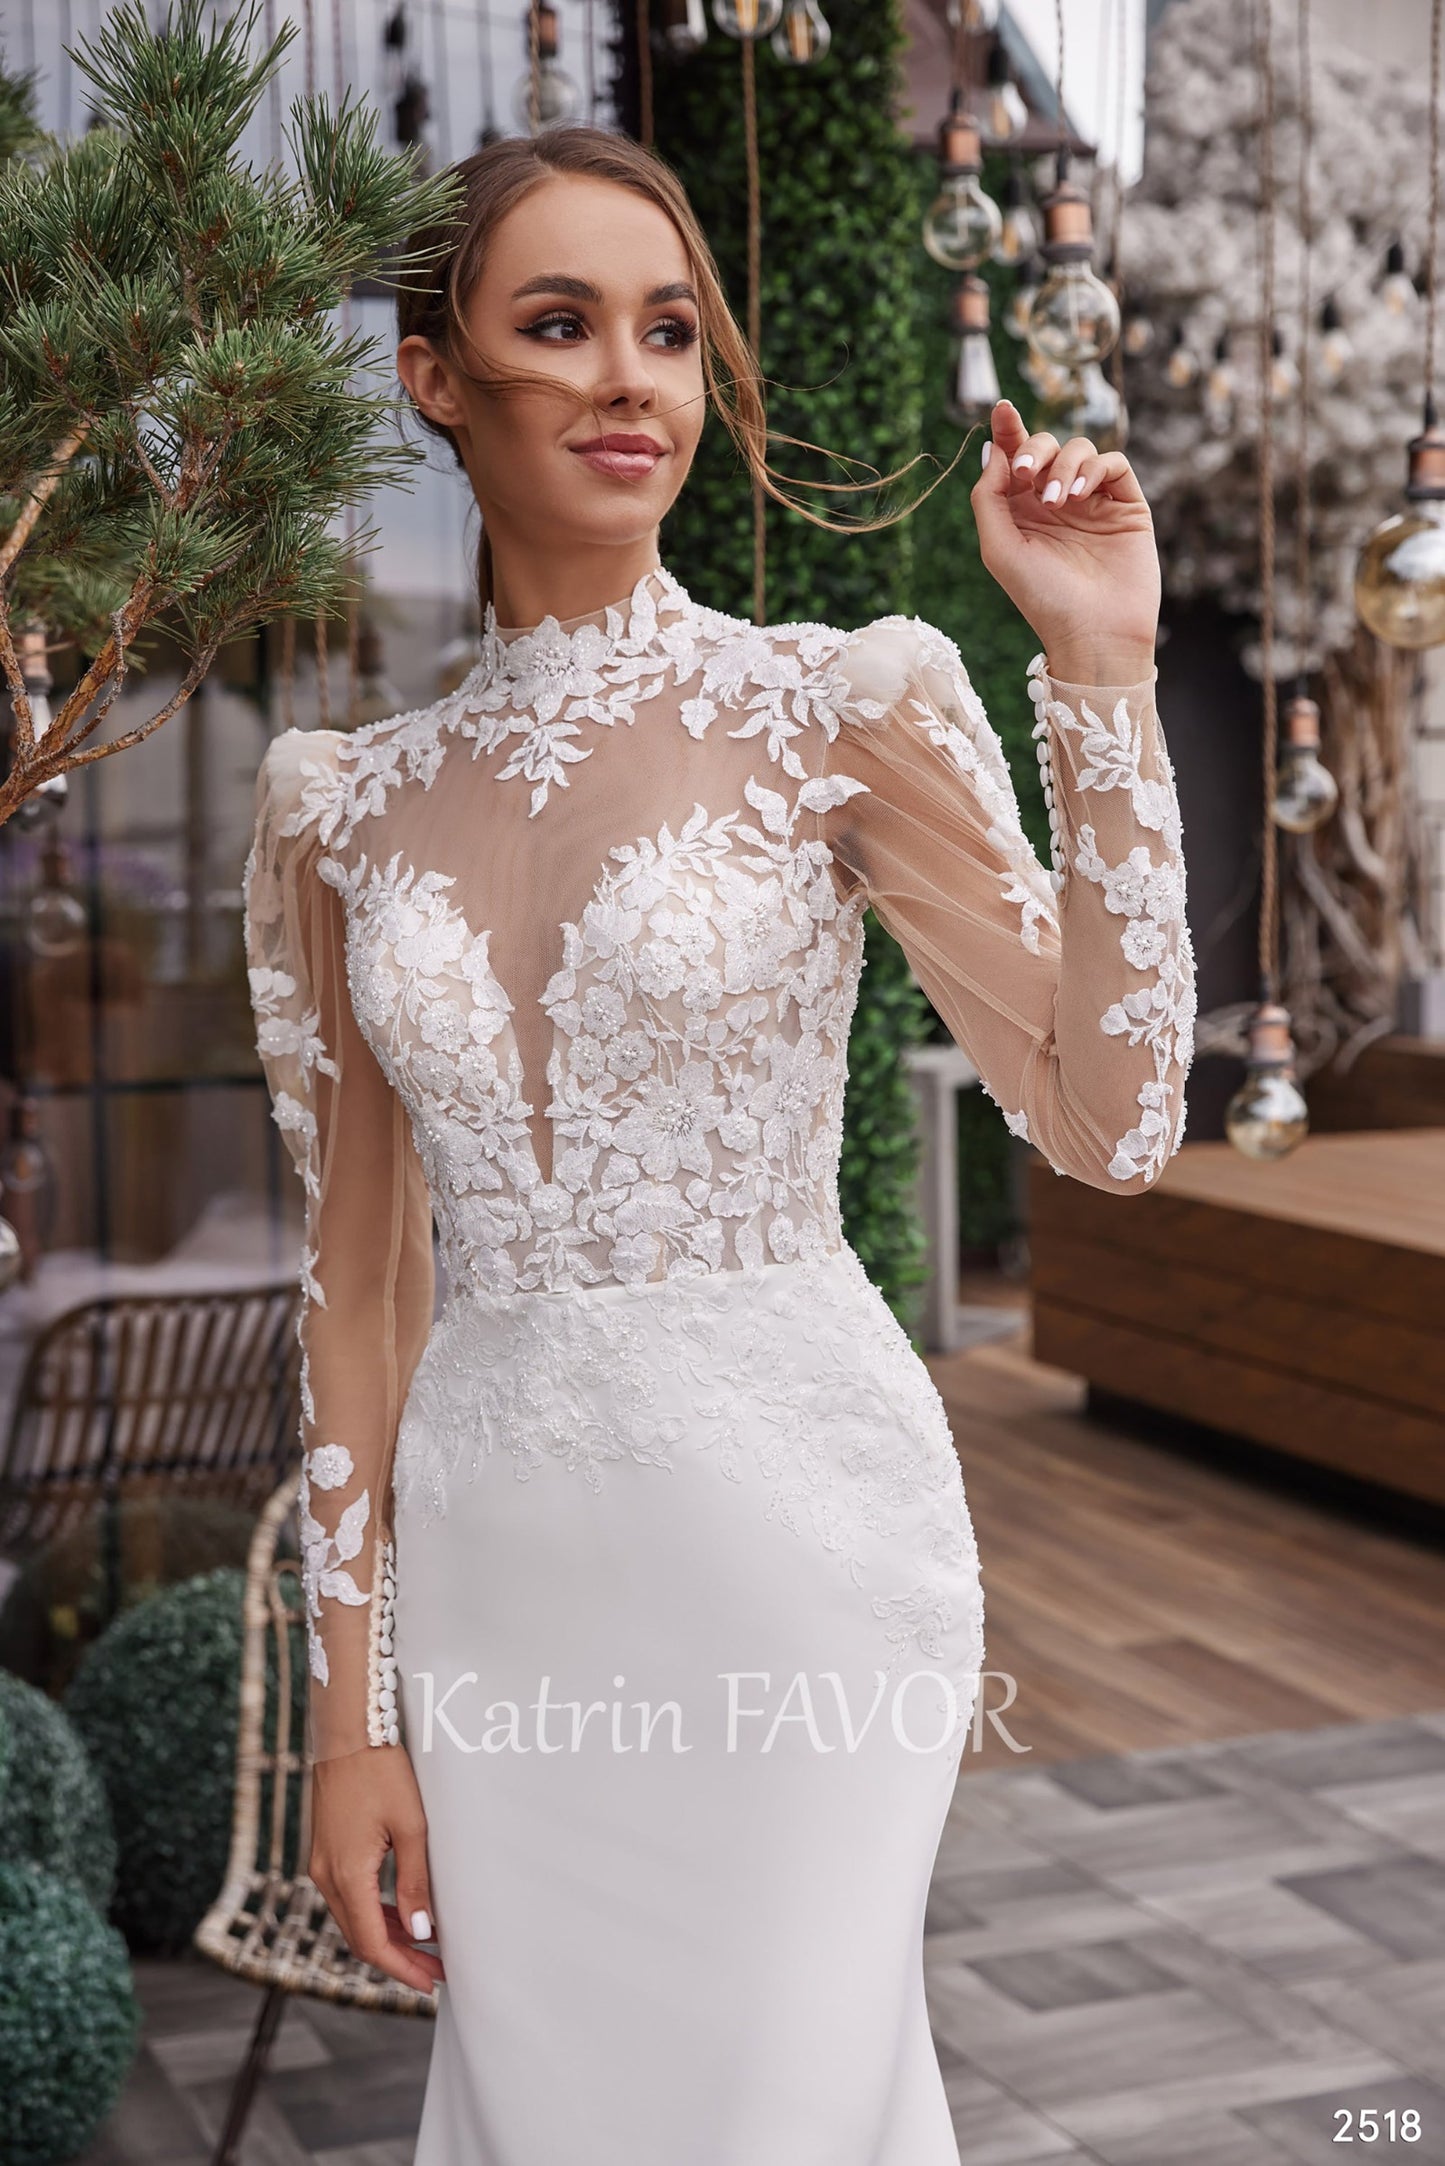 KatrinFAVORboutique-2 in 1 embroidered long sleeve blush wedding dress